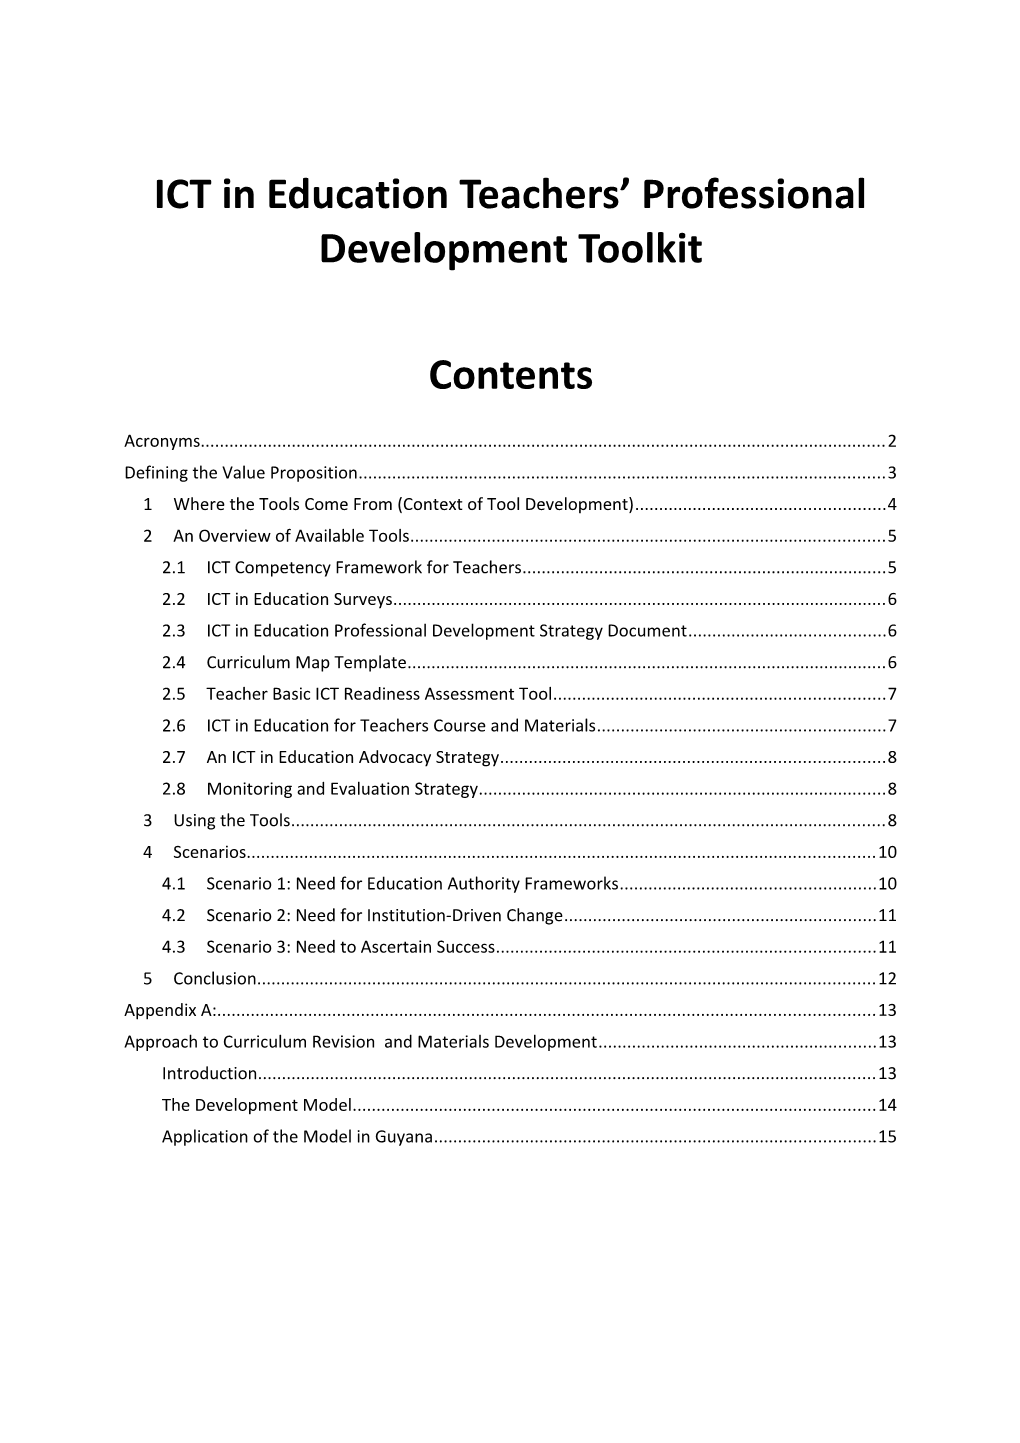 ICT in Education Teachers Professional Development Toolkit